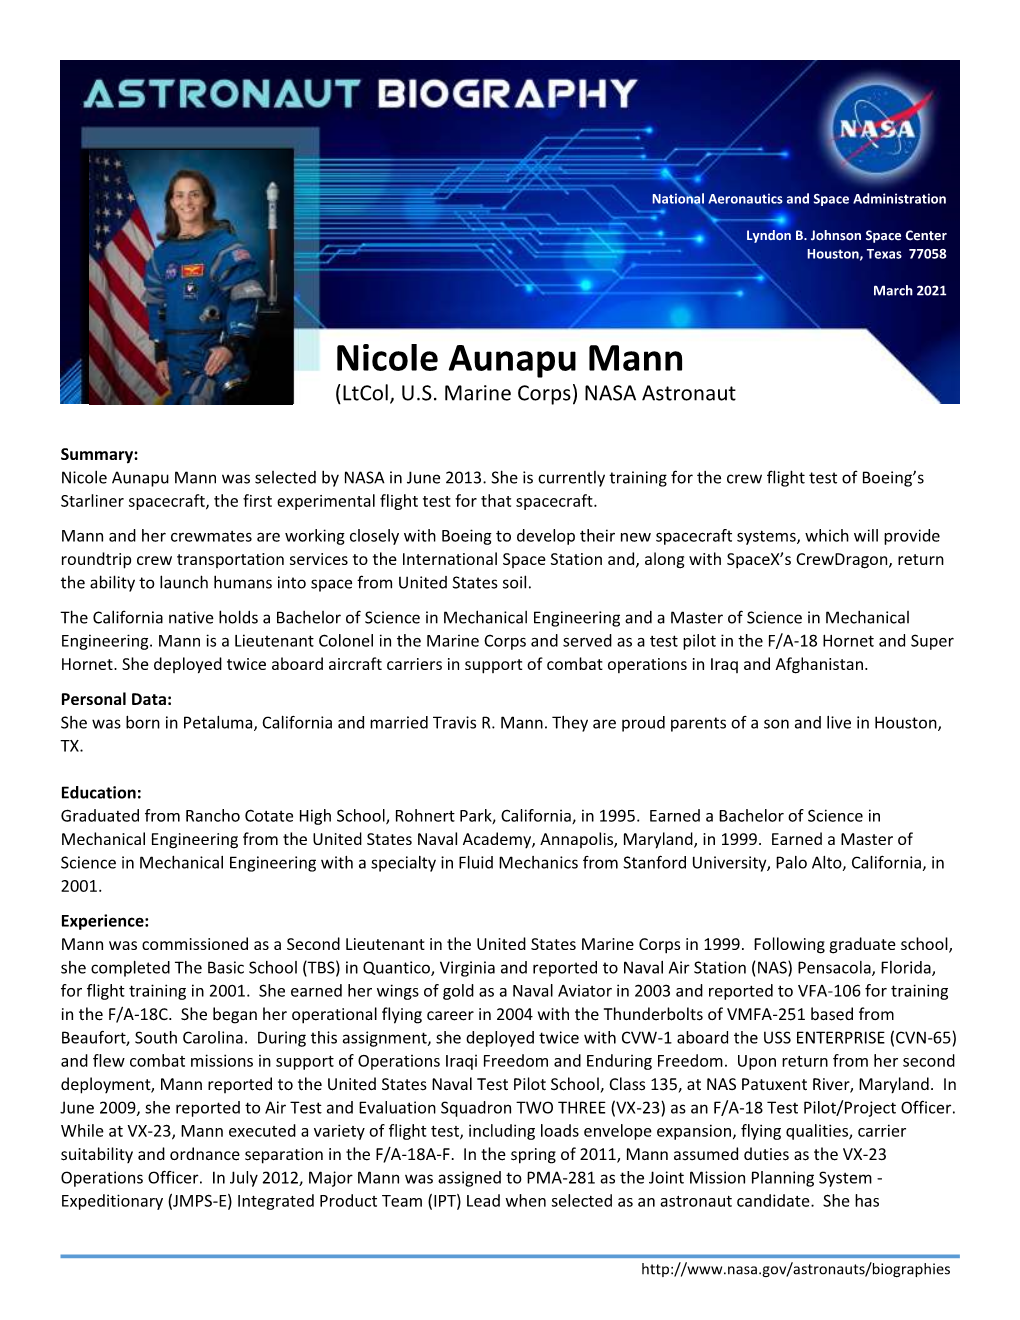 Nicole Aunapu Mann (Ltcol, U.S